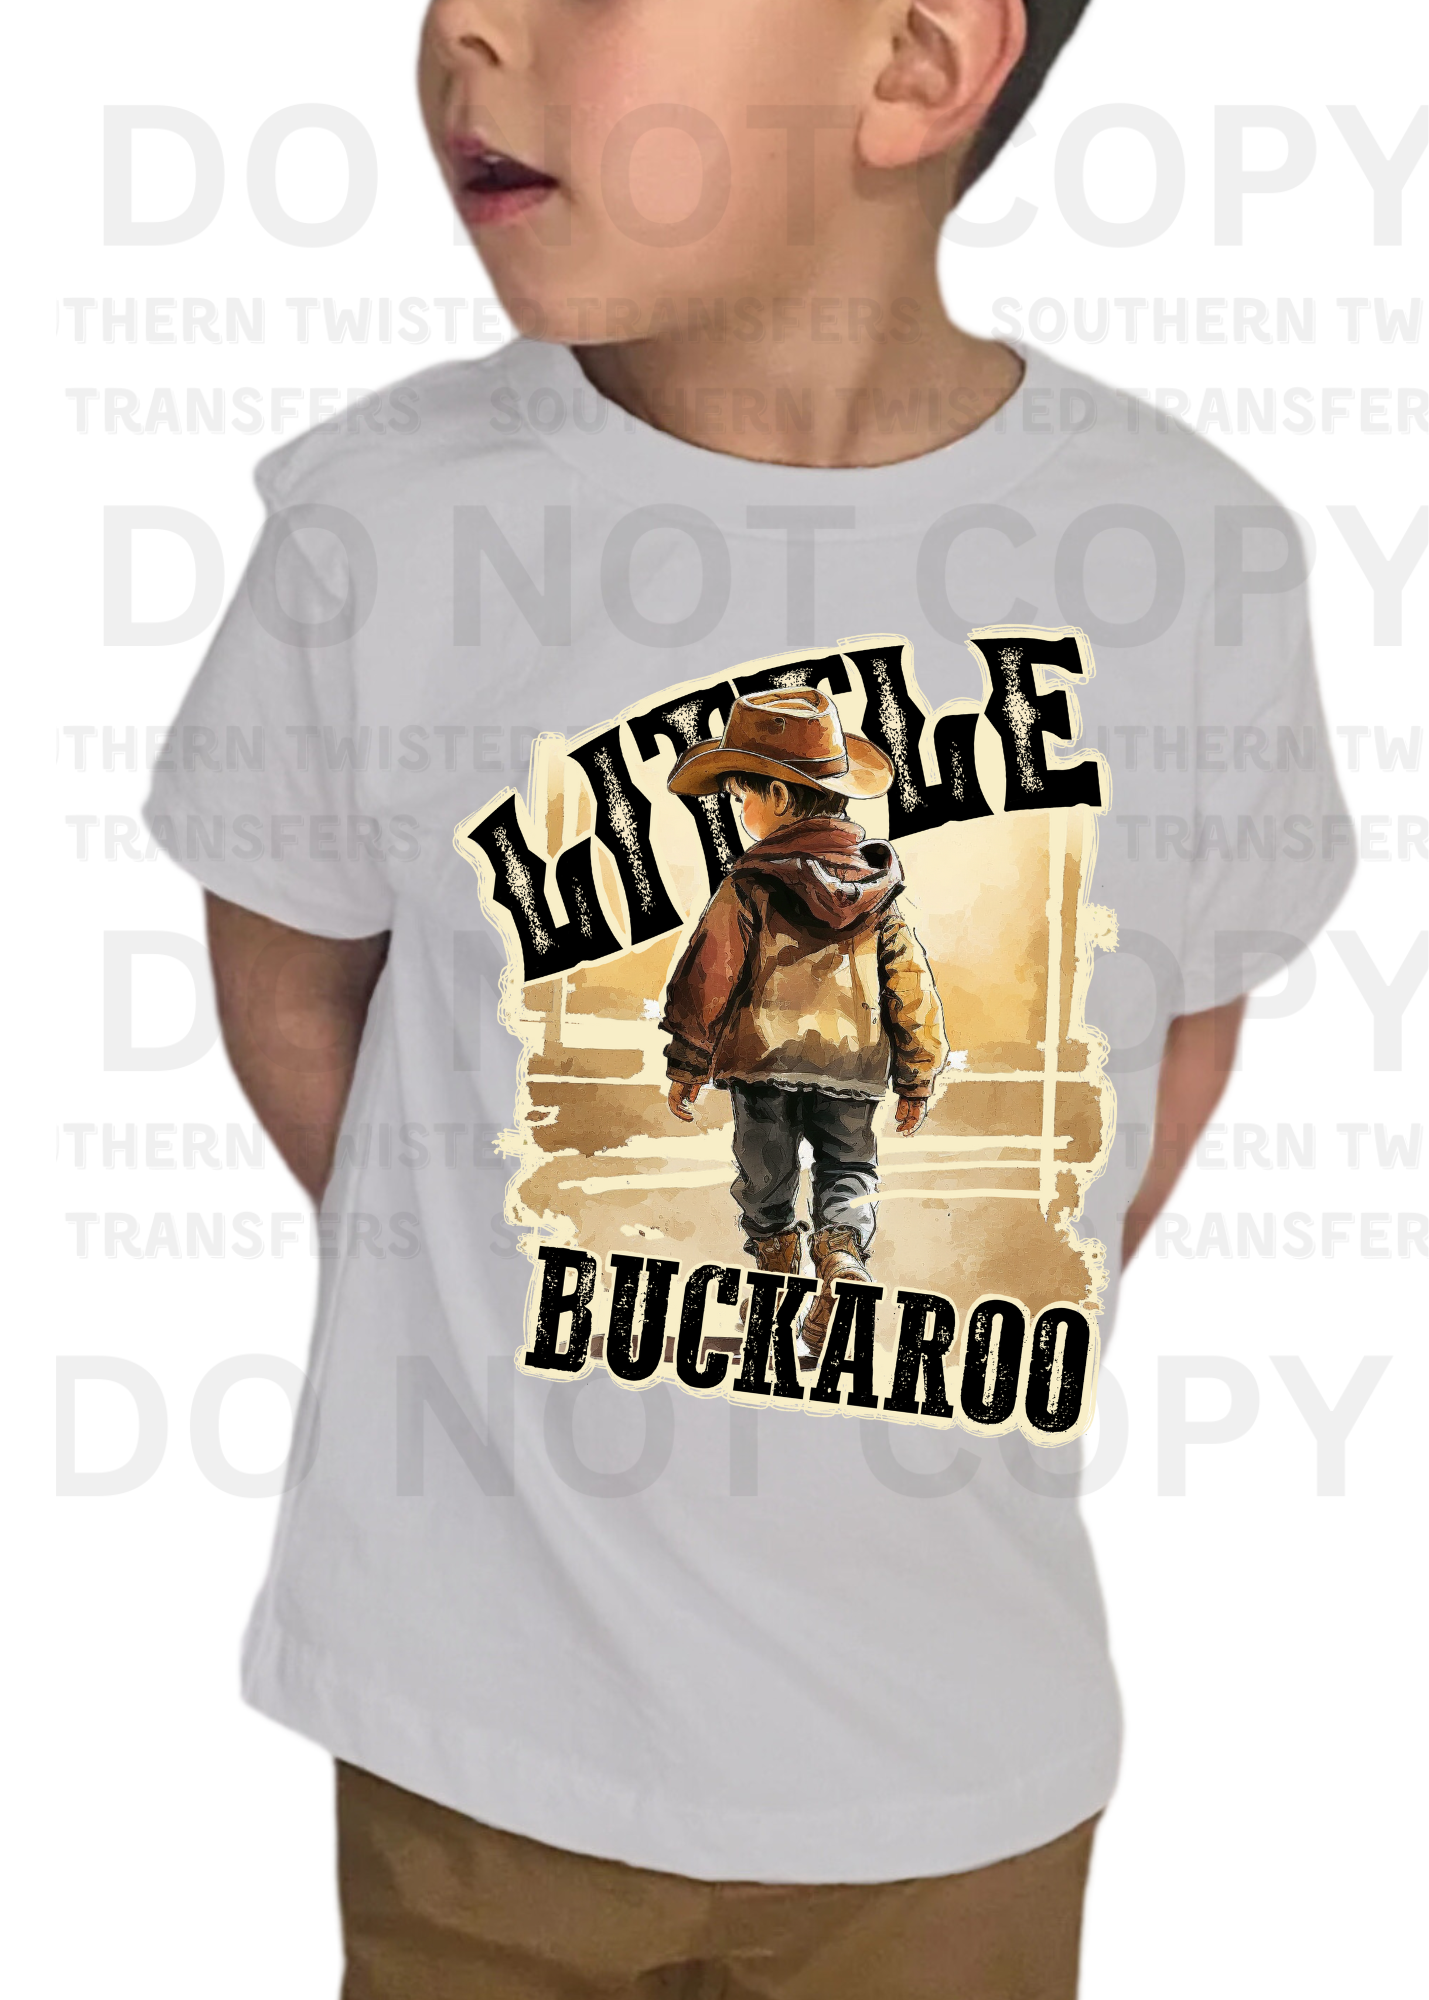 Little Buckaroo – Southern Twisted Tees